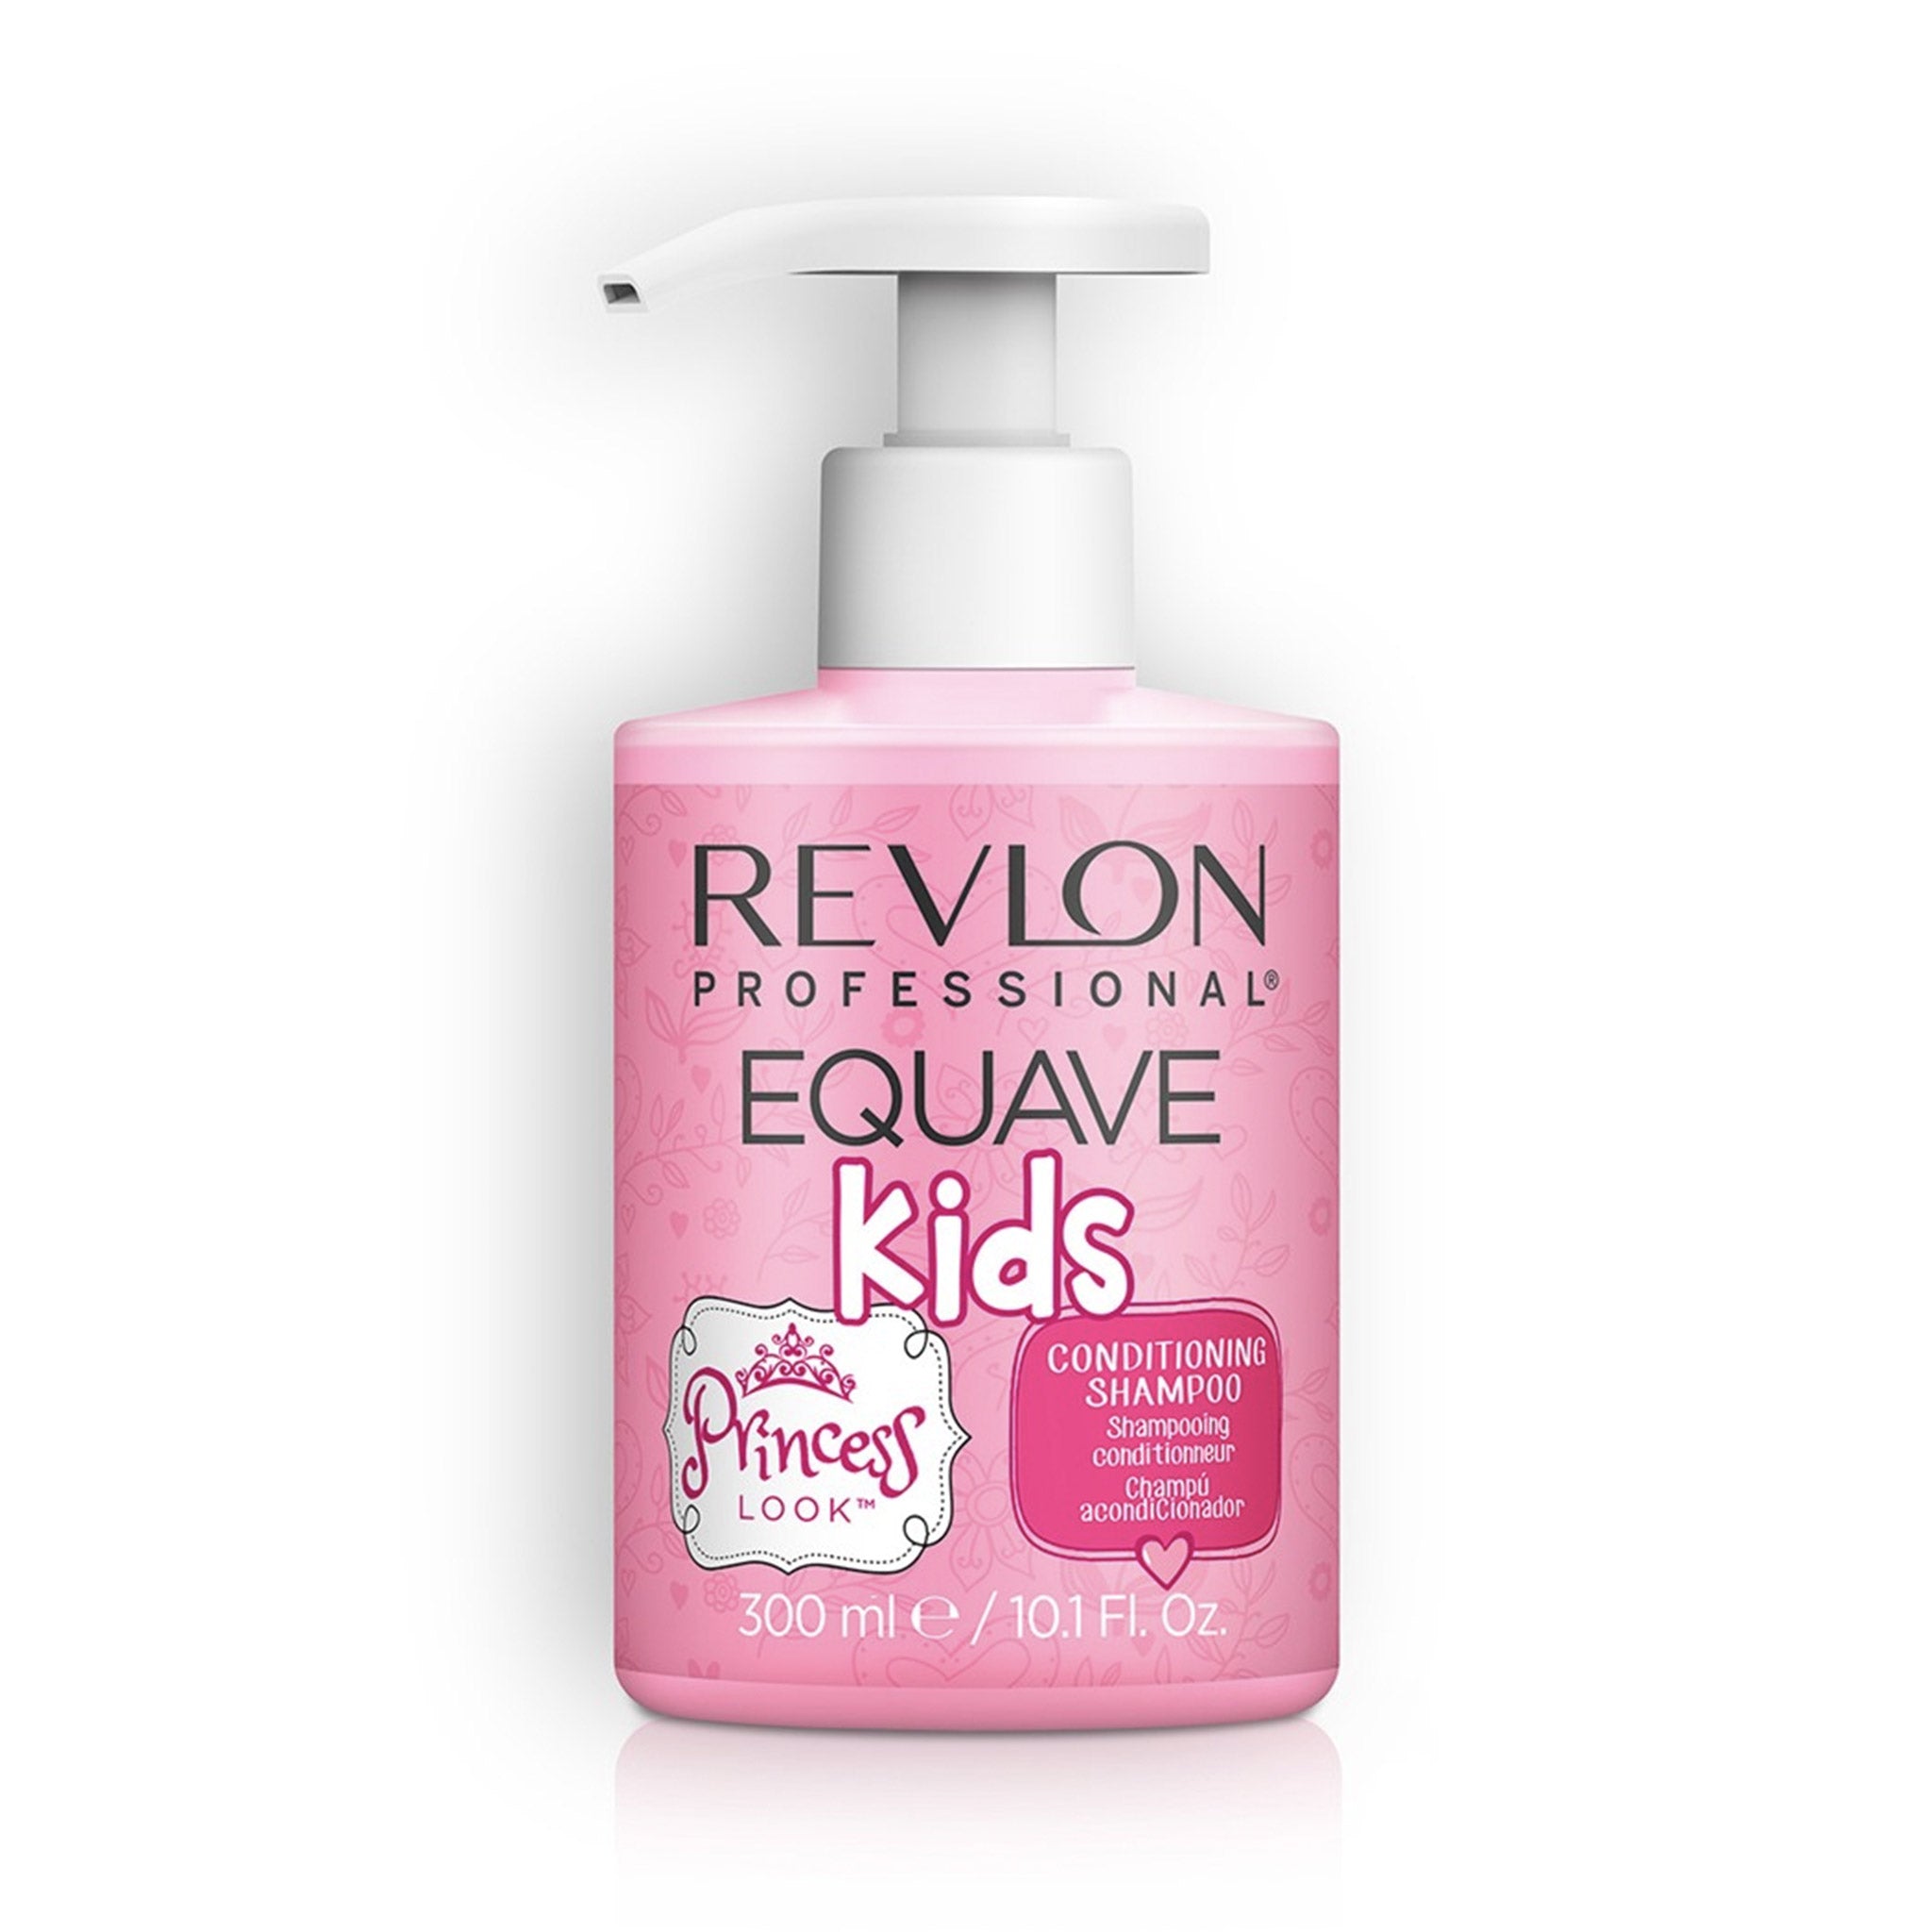 Equave Kids Princess Conditioning Shampoo